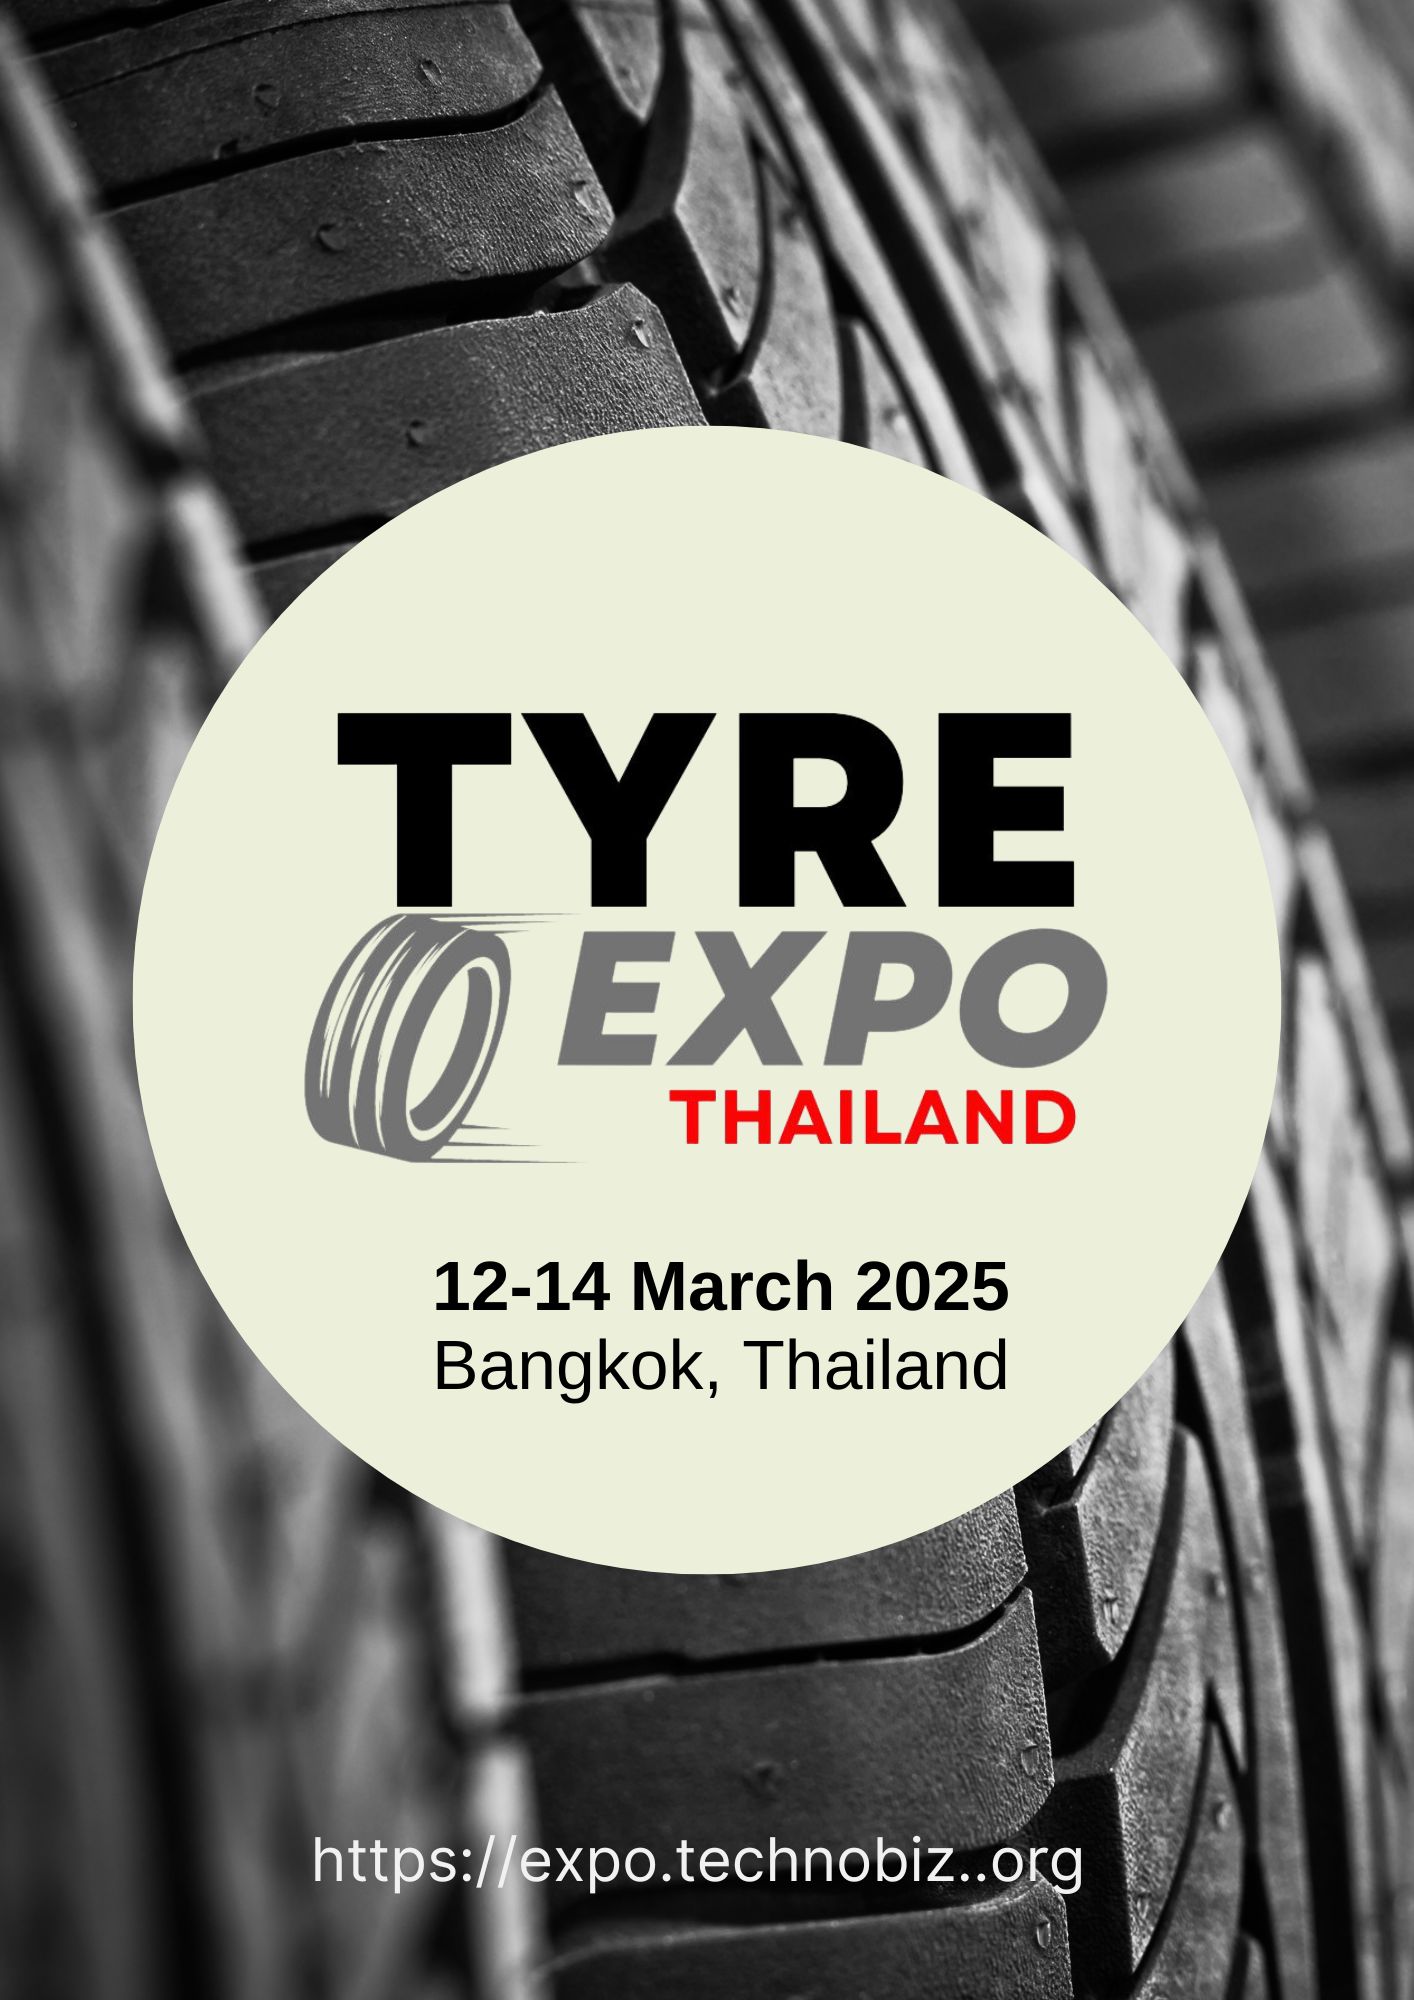 Tyre Expo Thailand 2025